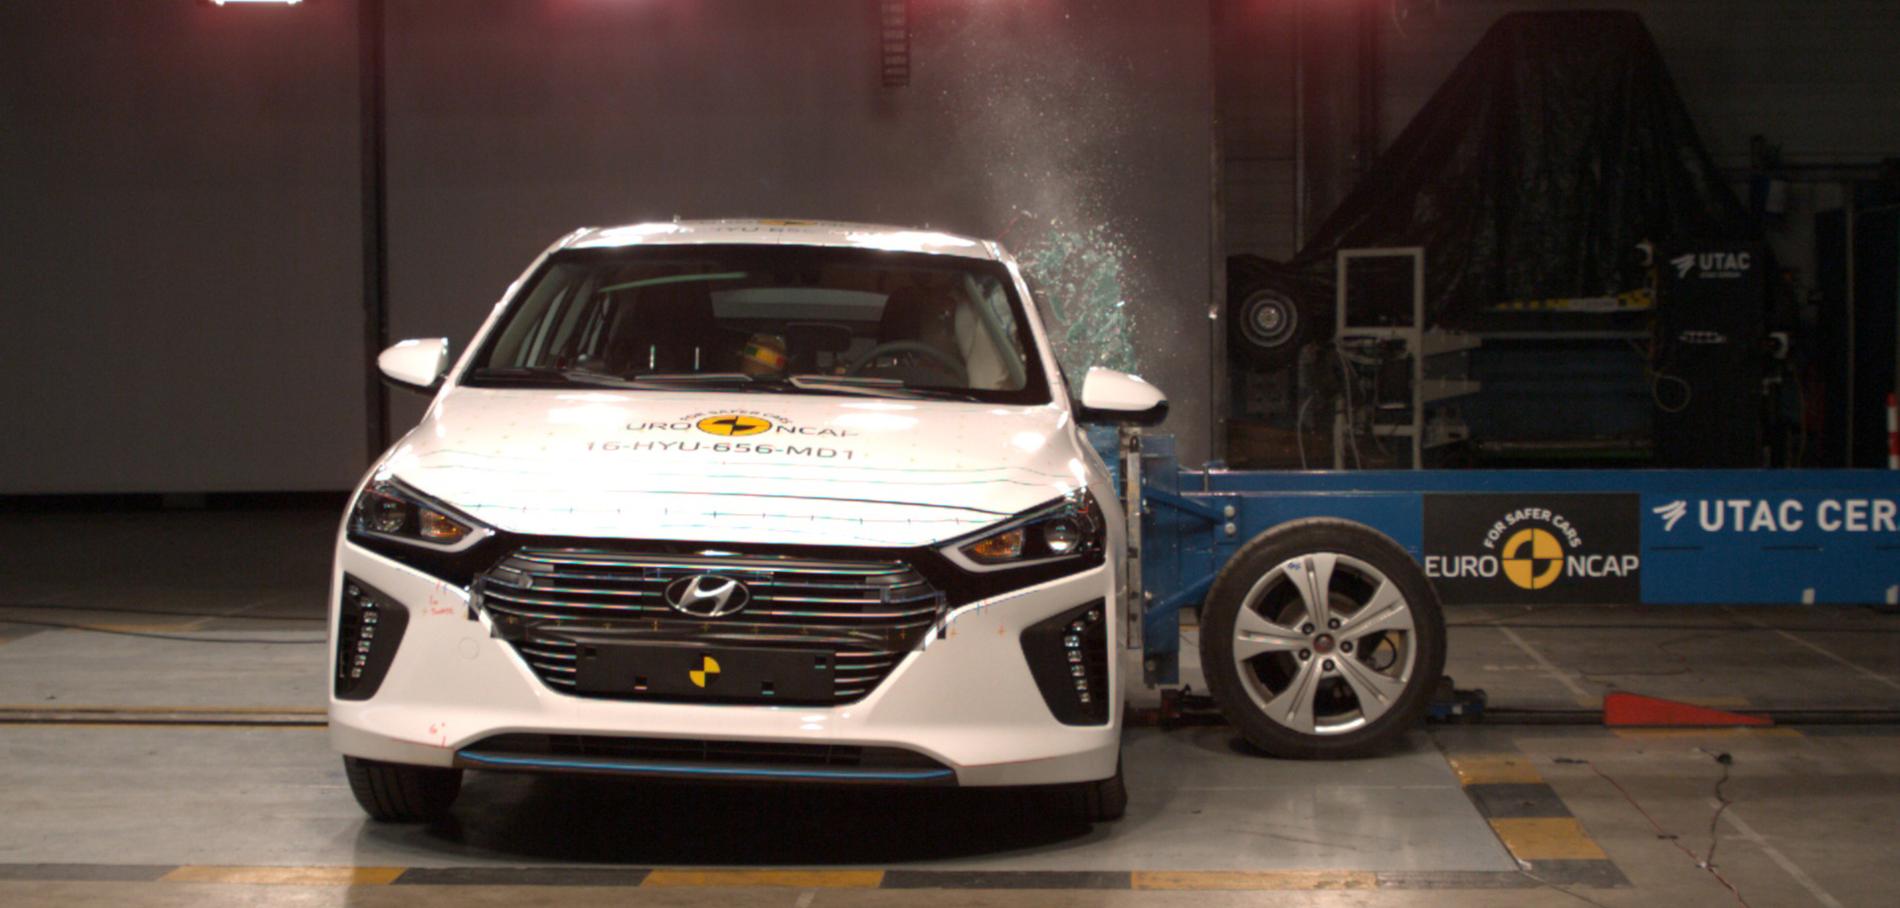 Hyundai Ionic får ett njurslag.